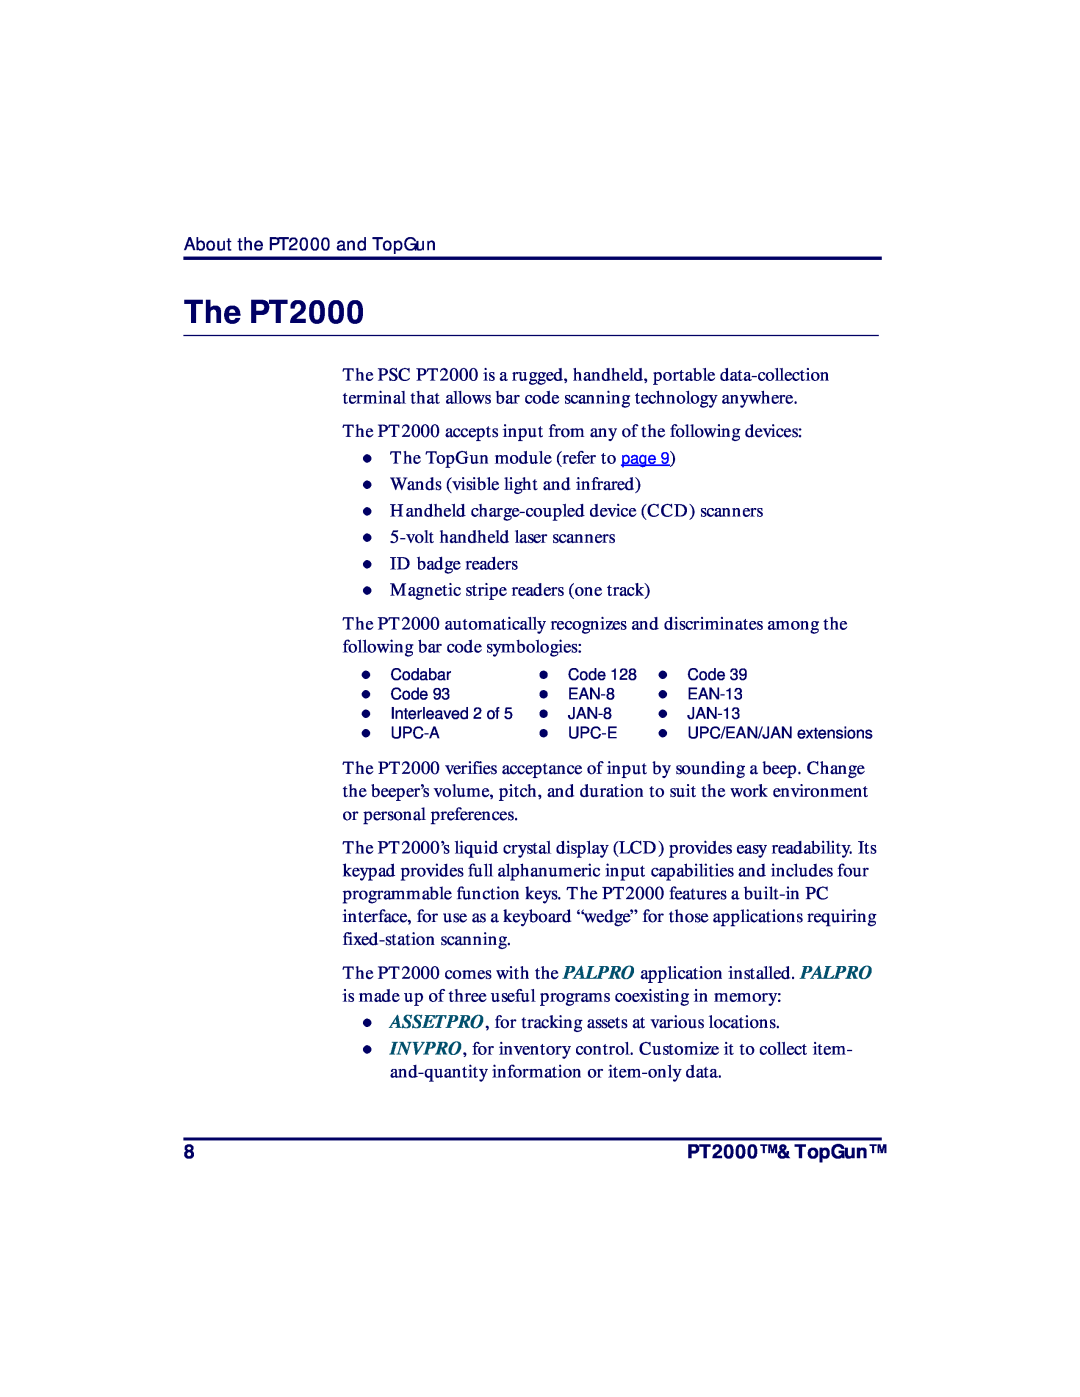 PSC TopGun manual The PT2000 